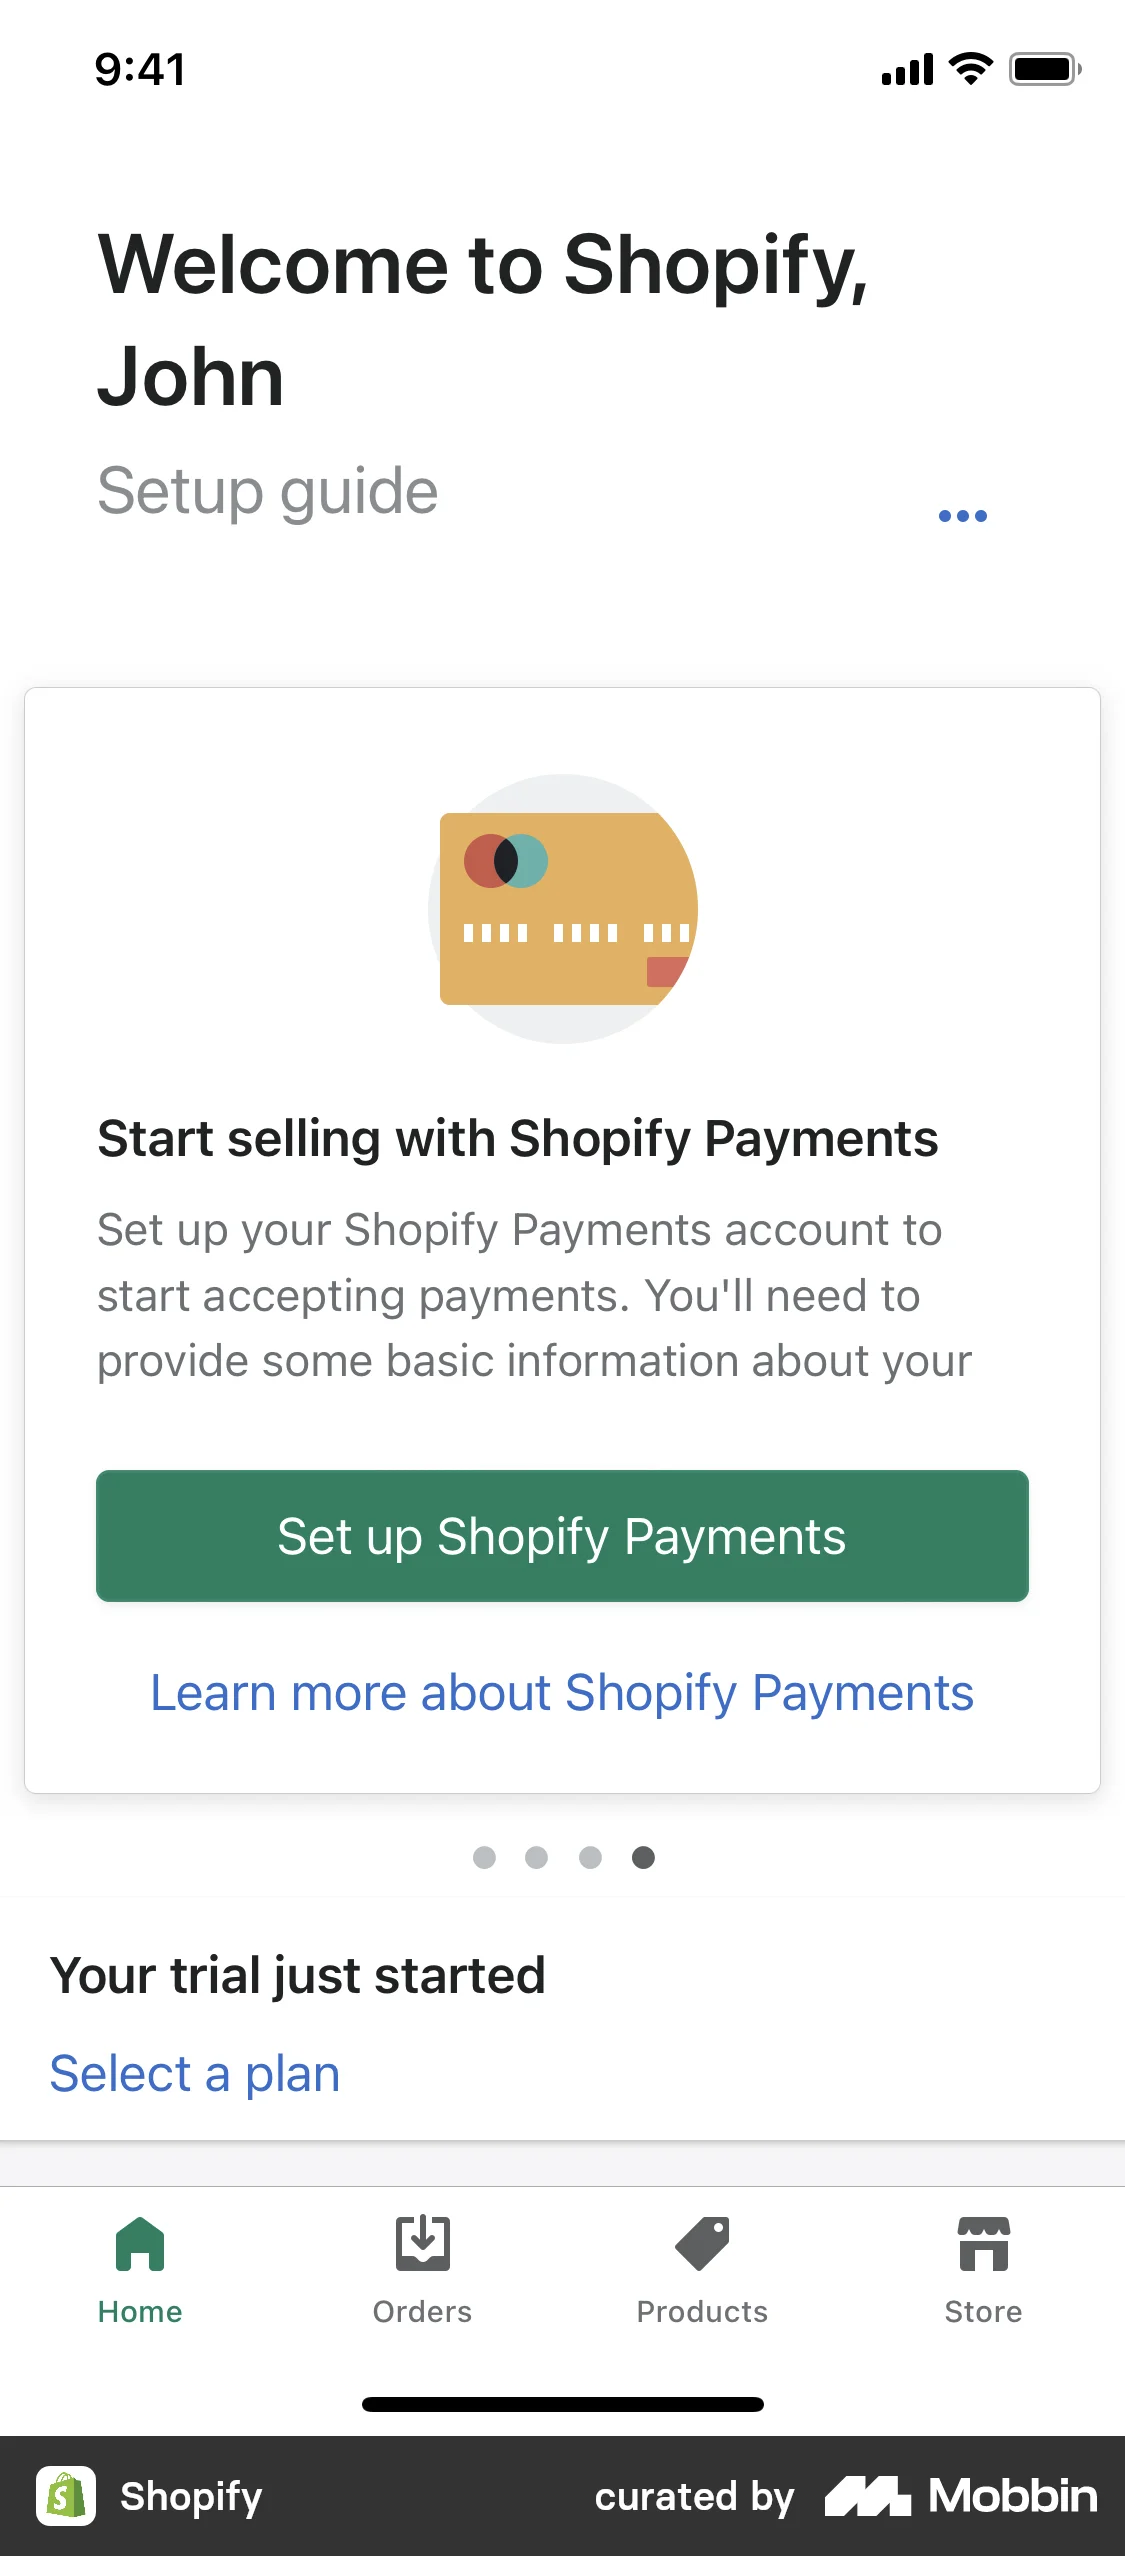 Shopify Home screen